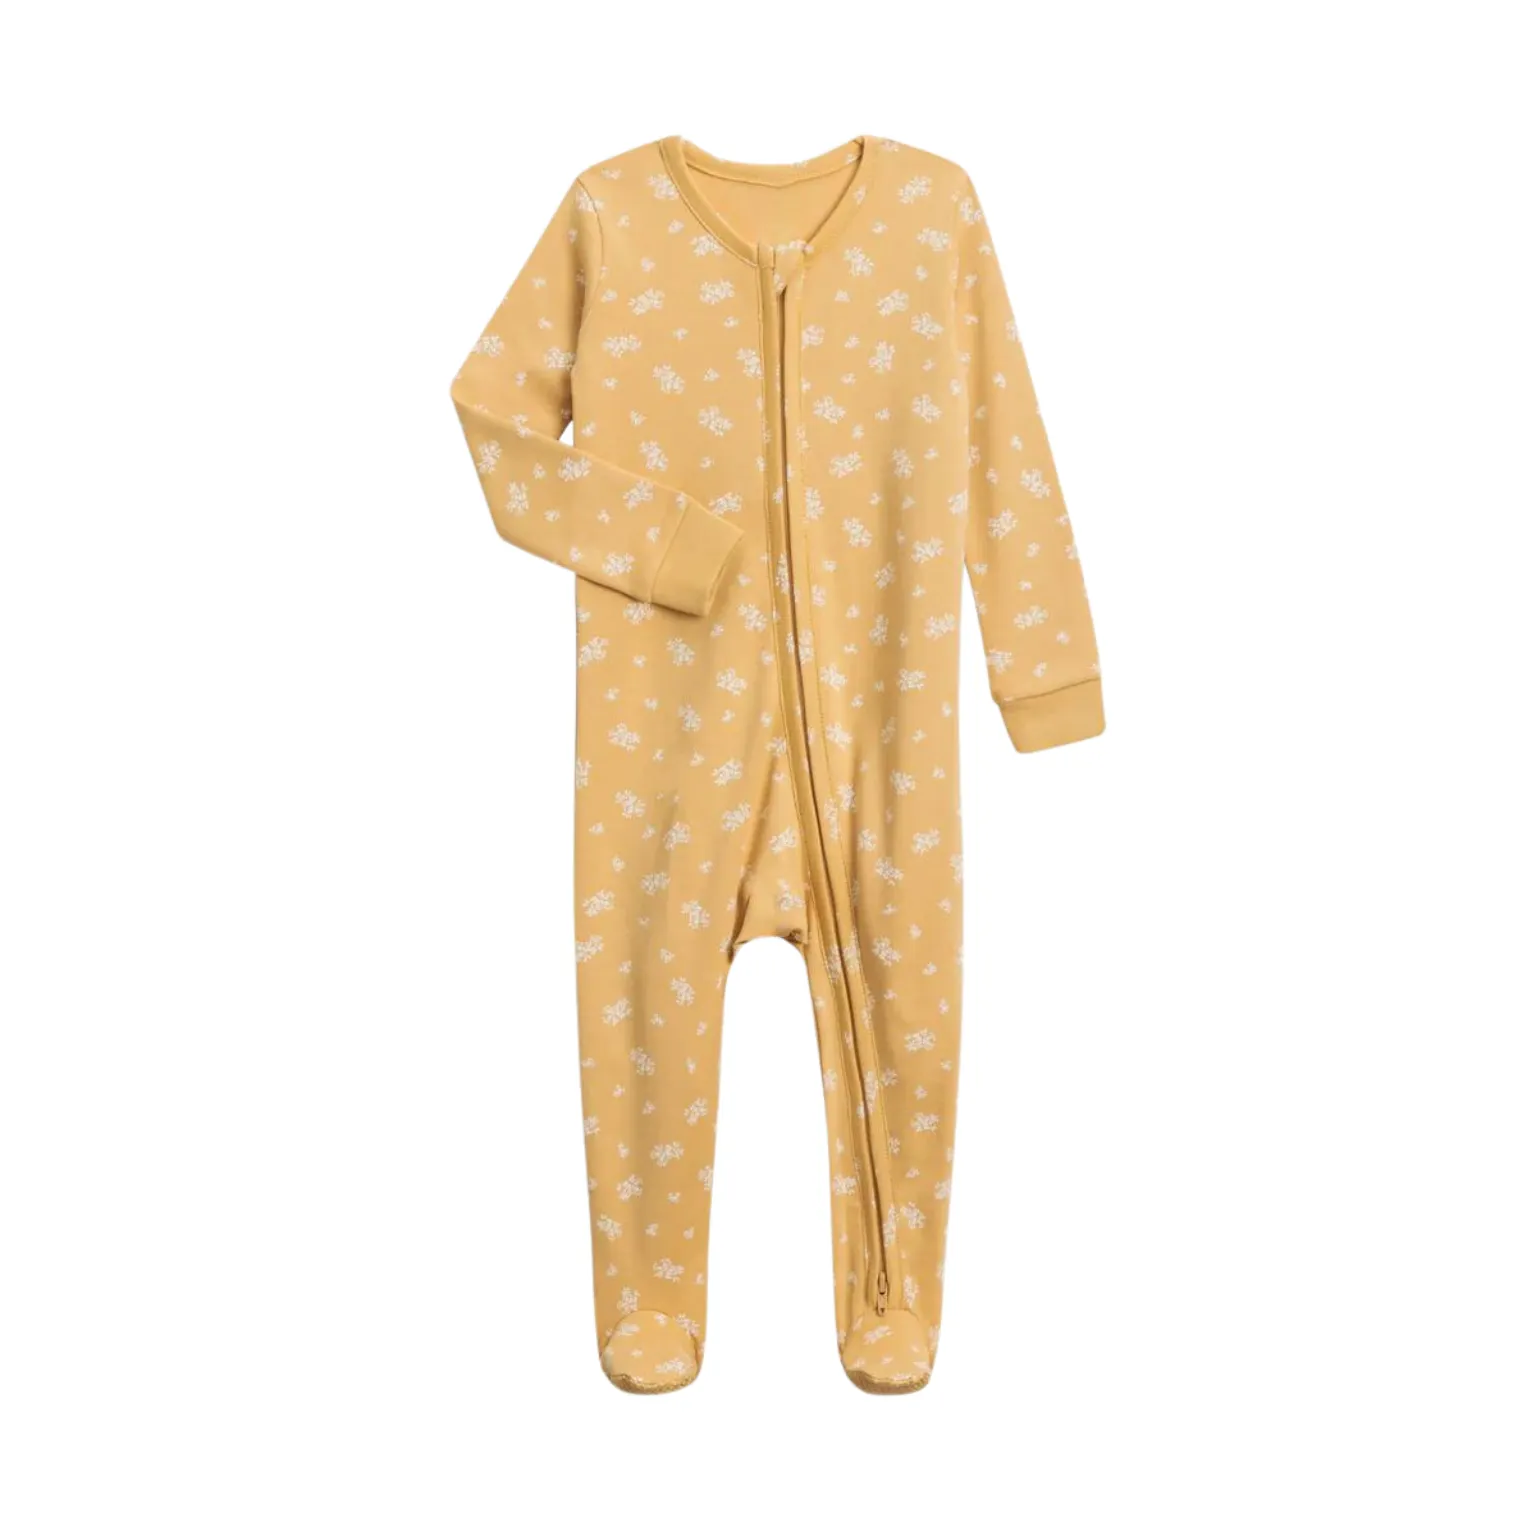 Manufacturing Baby Pajamas with reasonable price